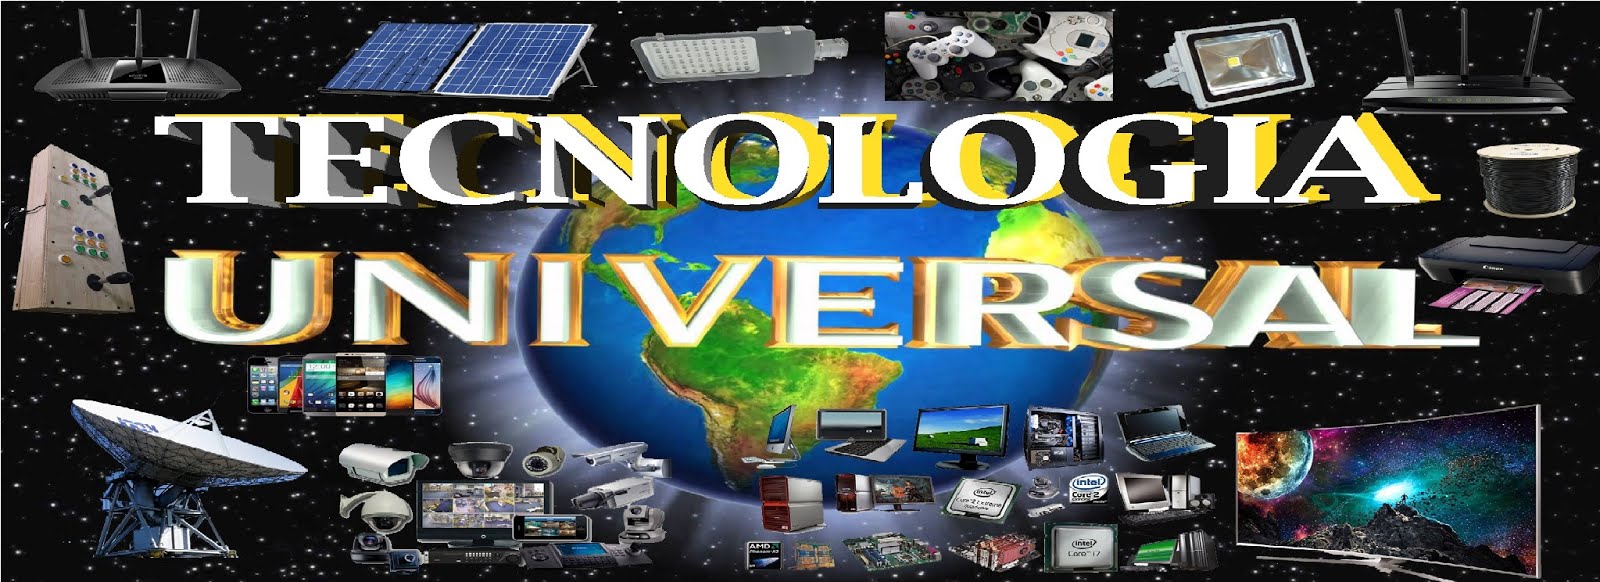 Entretenimiento Tecnologia Universal Bolivia